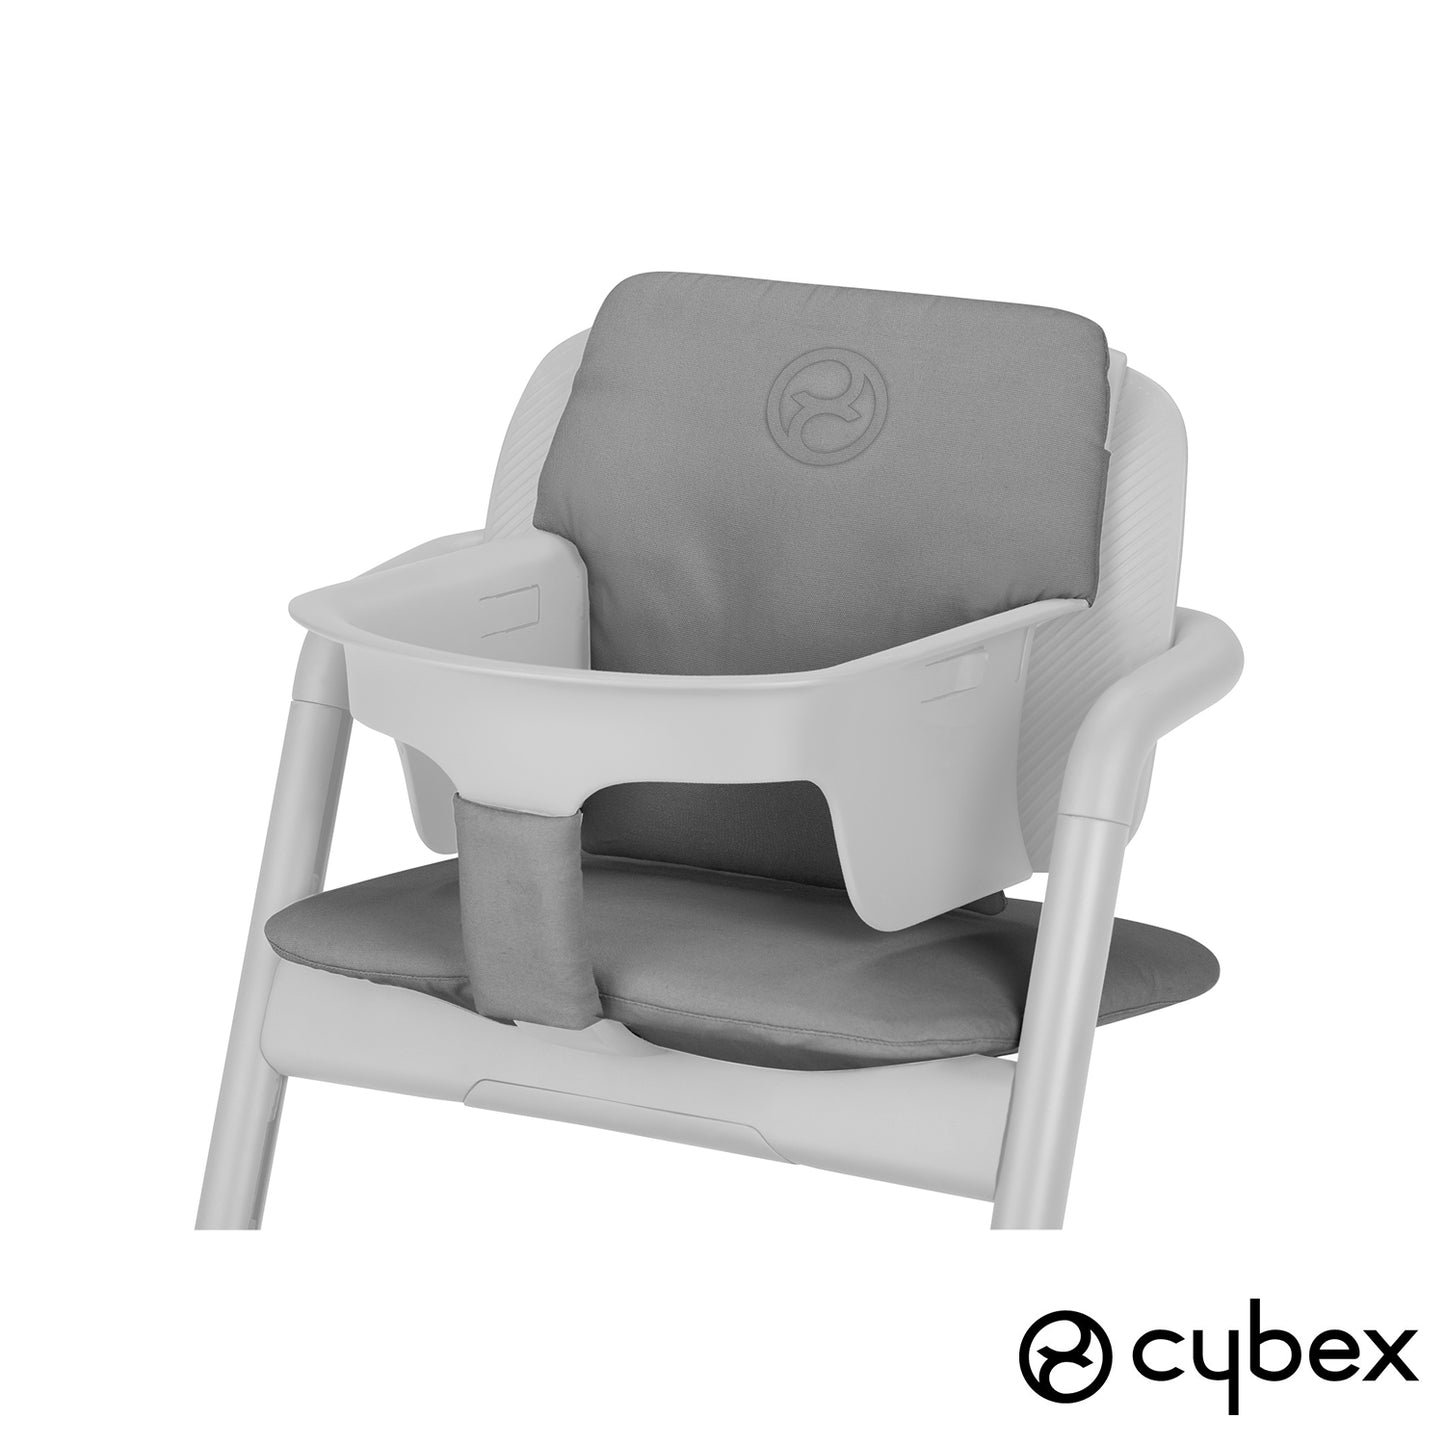 Cybex - Cuscino Comfort Inlay per Seggiolone LEMO Chair